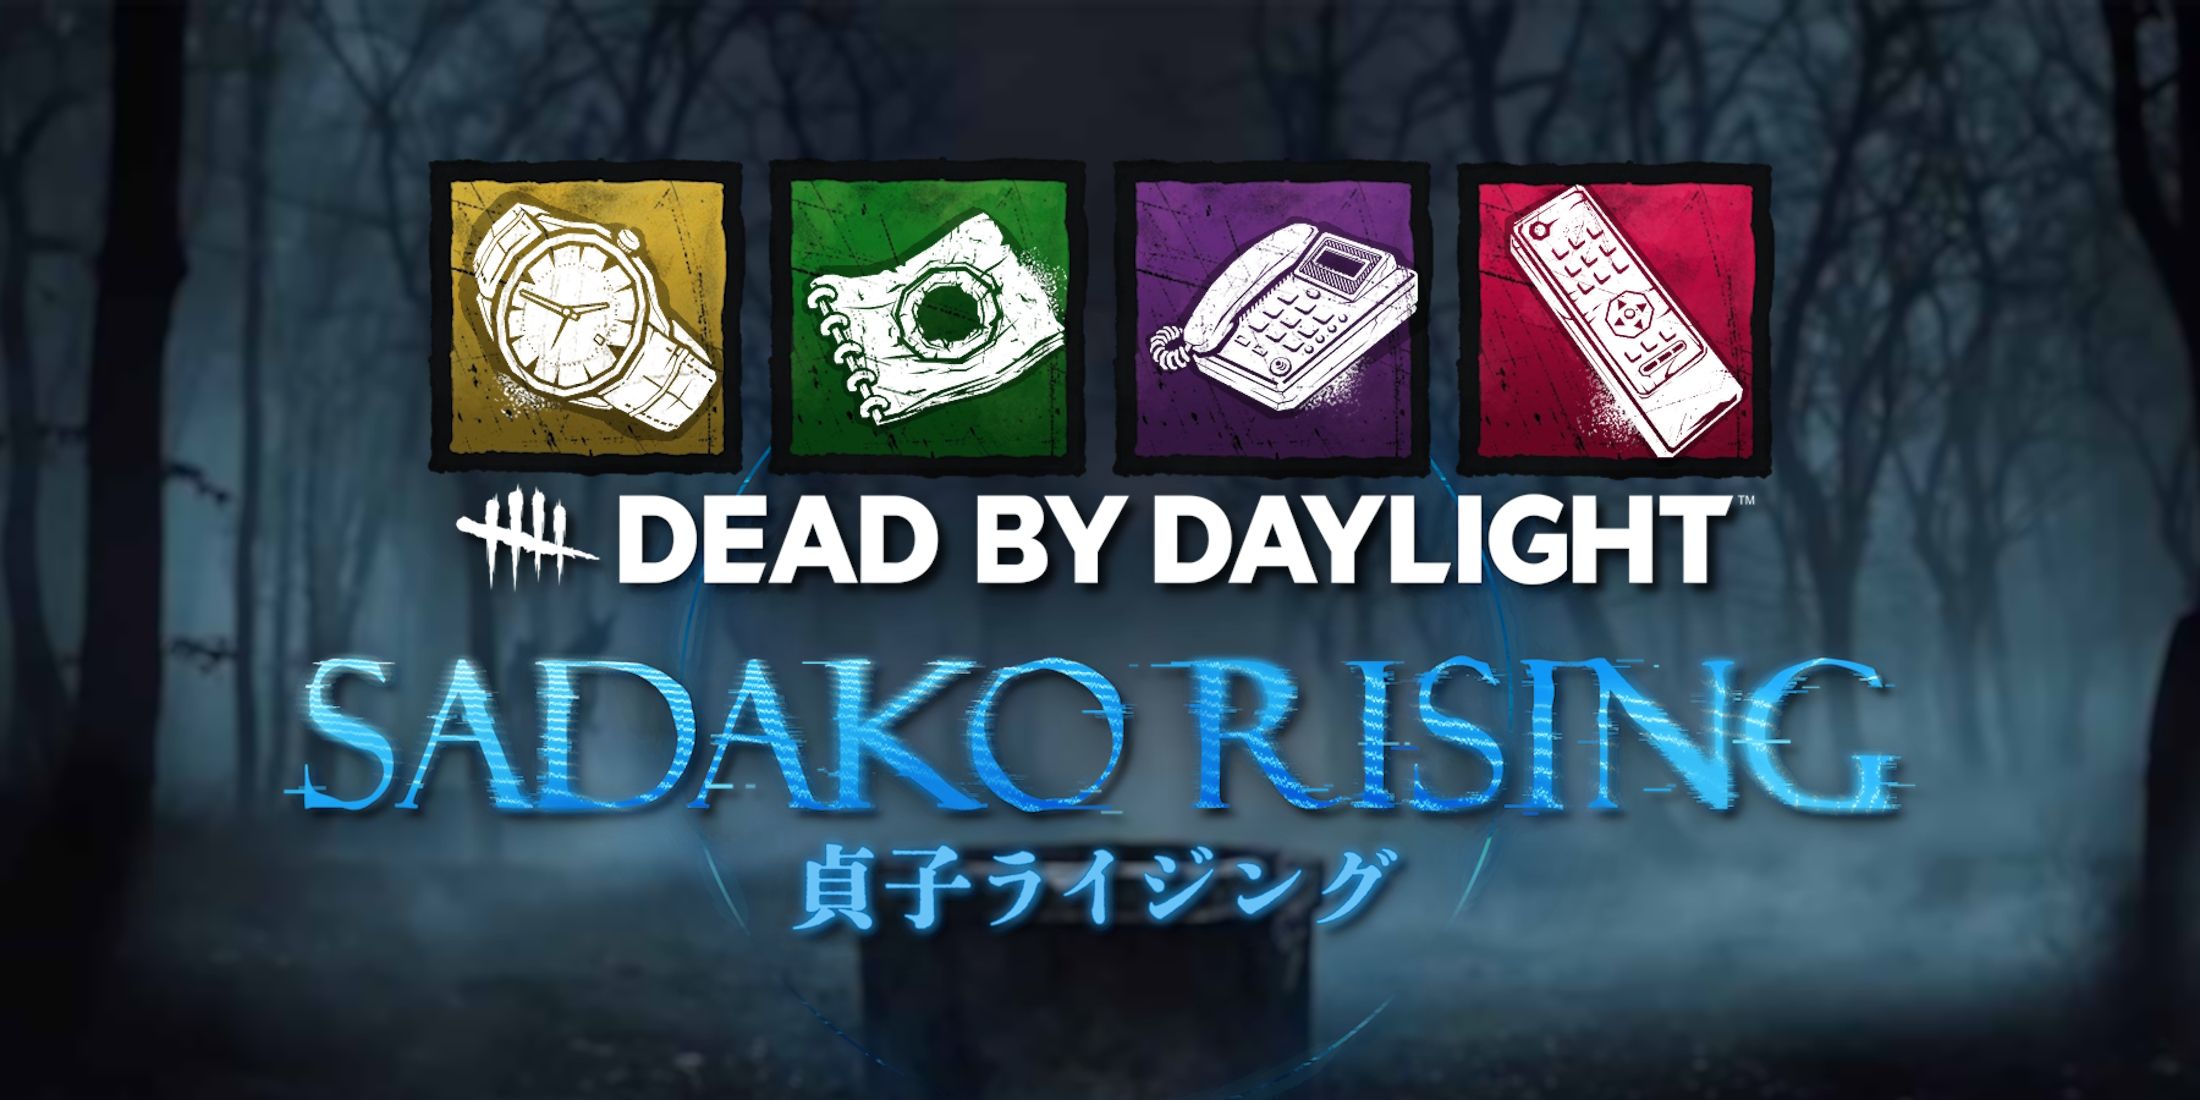 dead by daylight sadako rising logo best addons